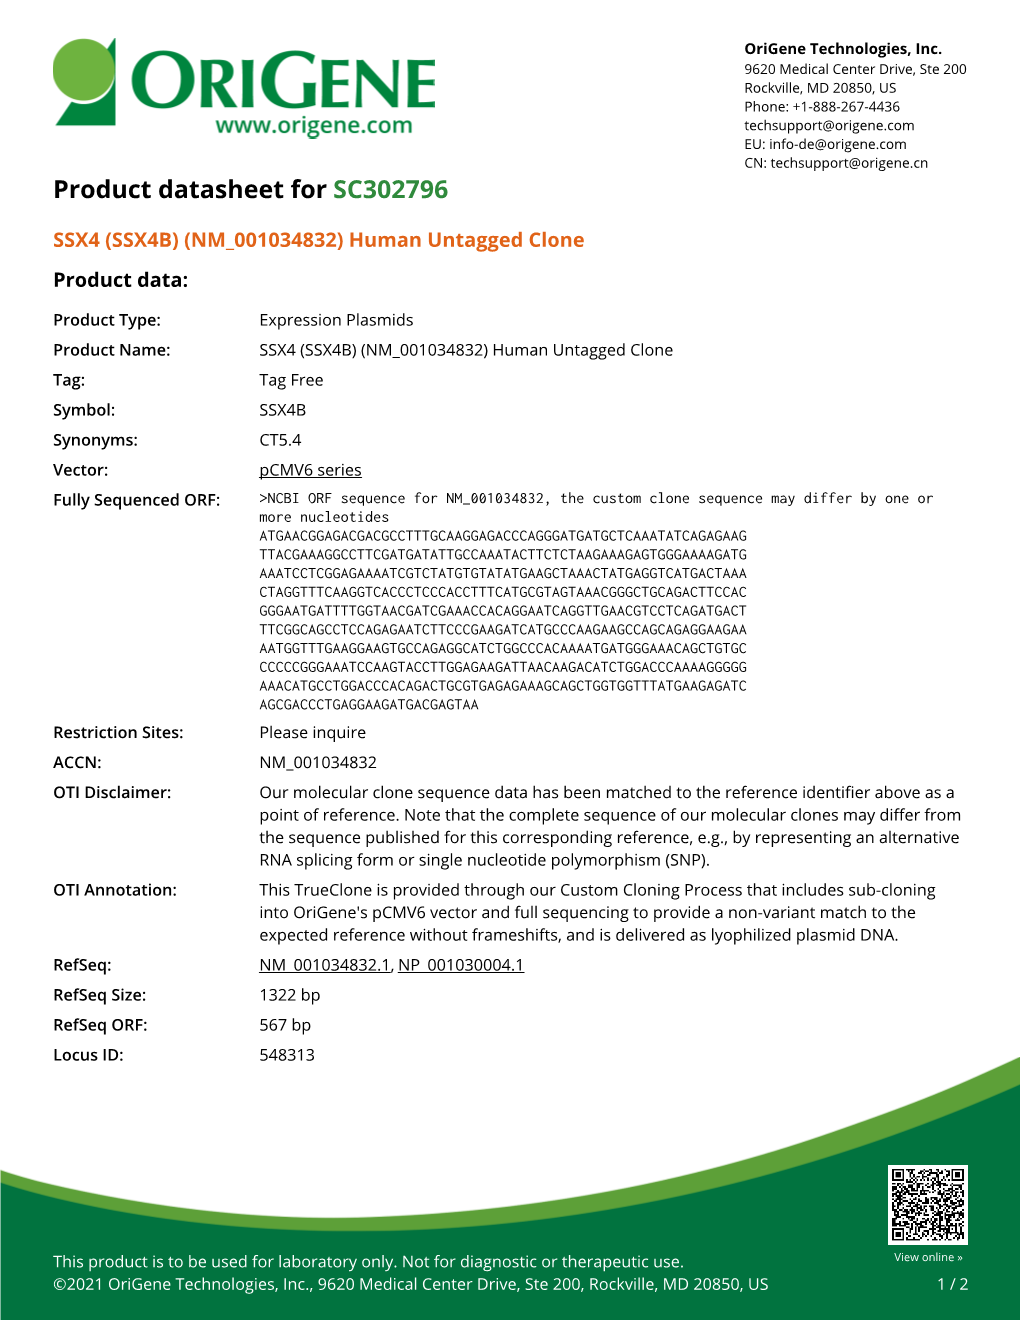 SSX4 (SSX4B) (NM 001034832) Human Untagged Clone Product Data